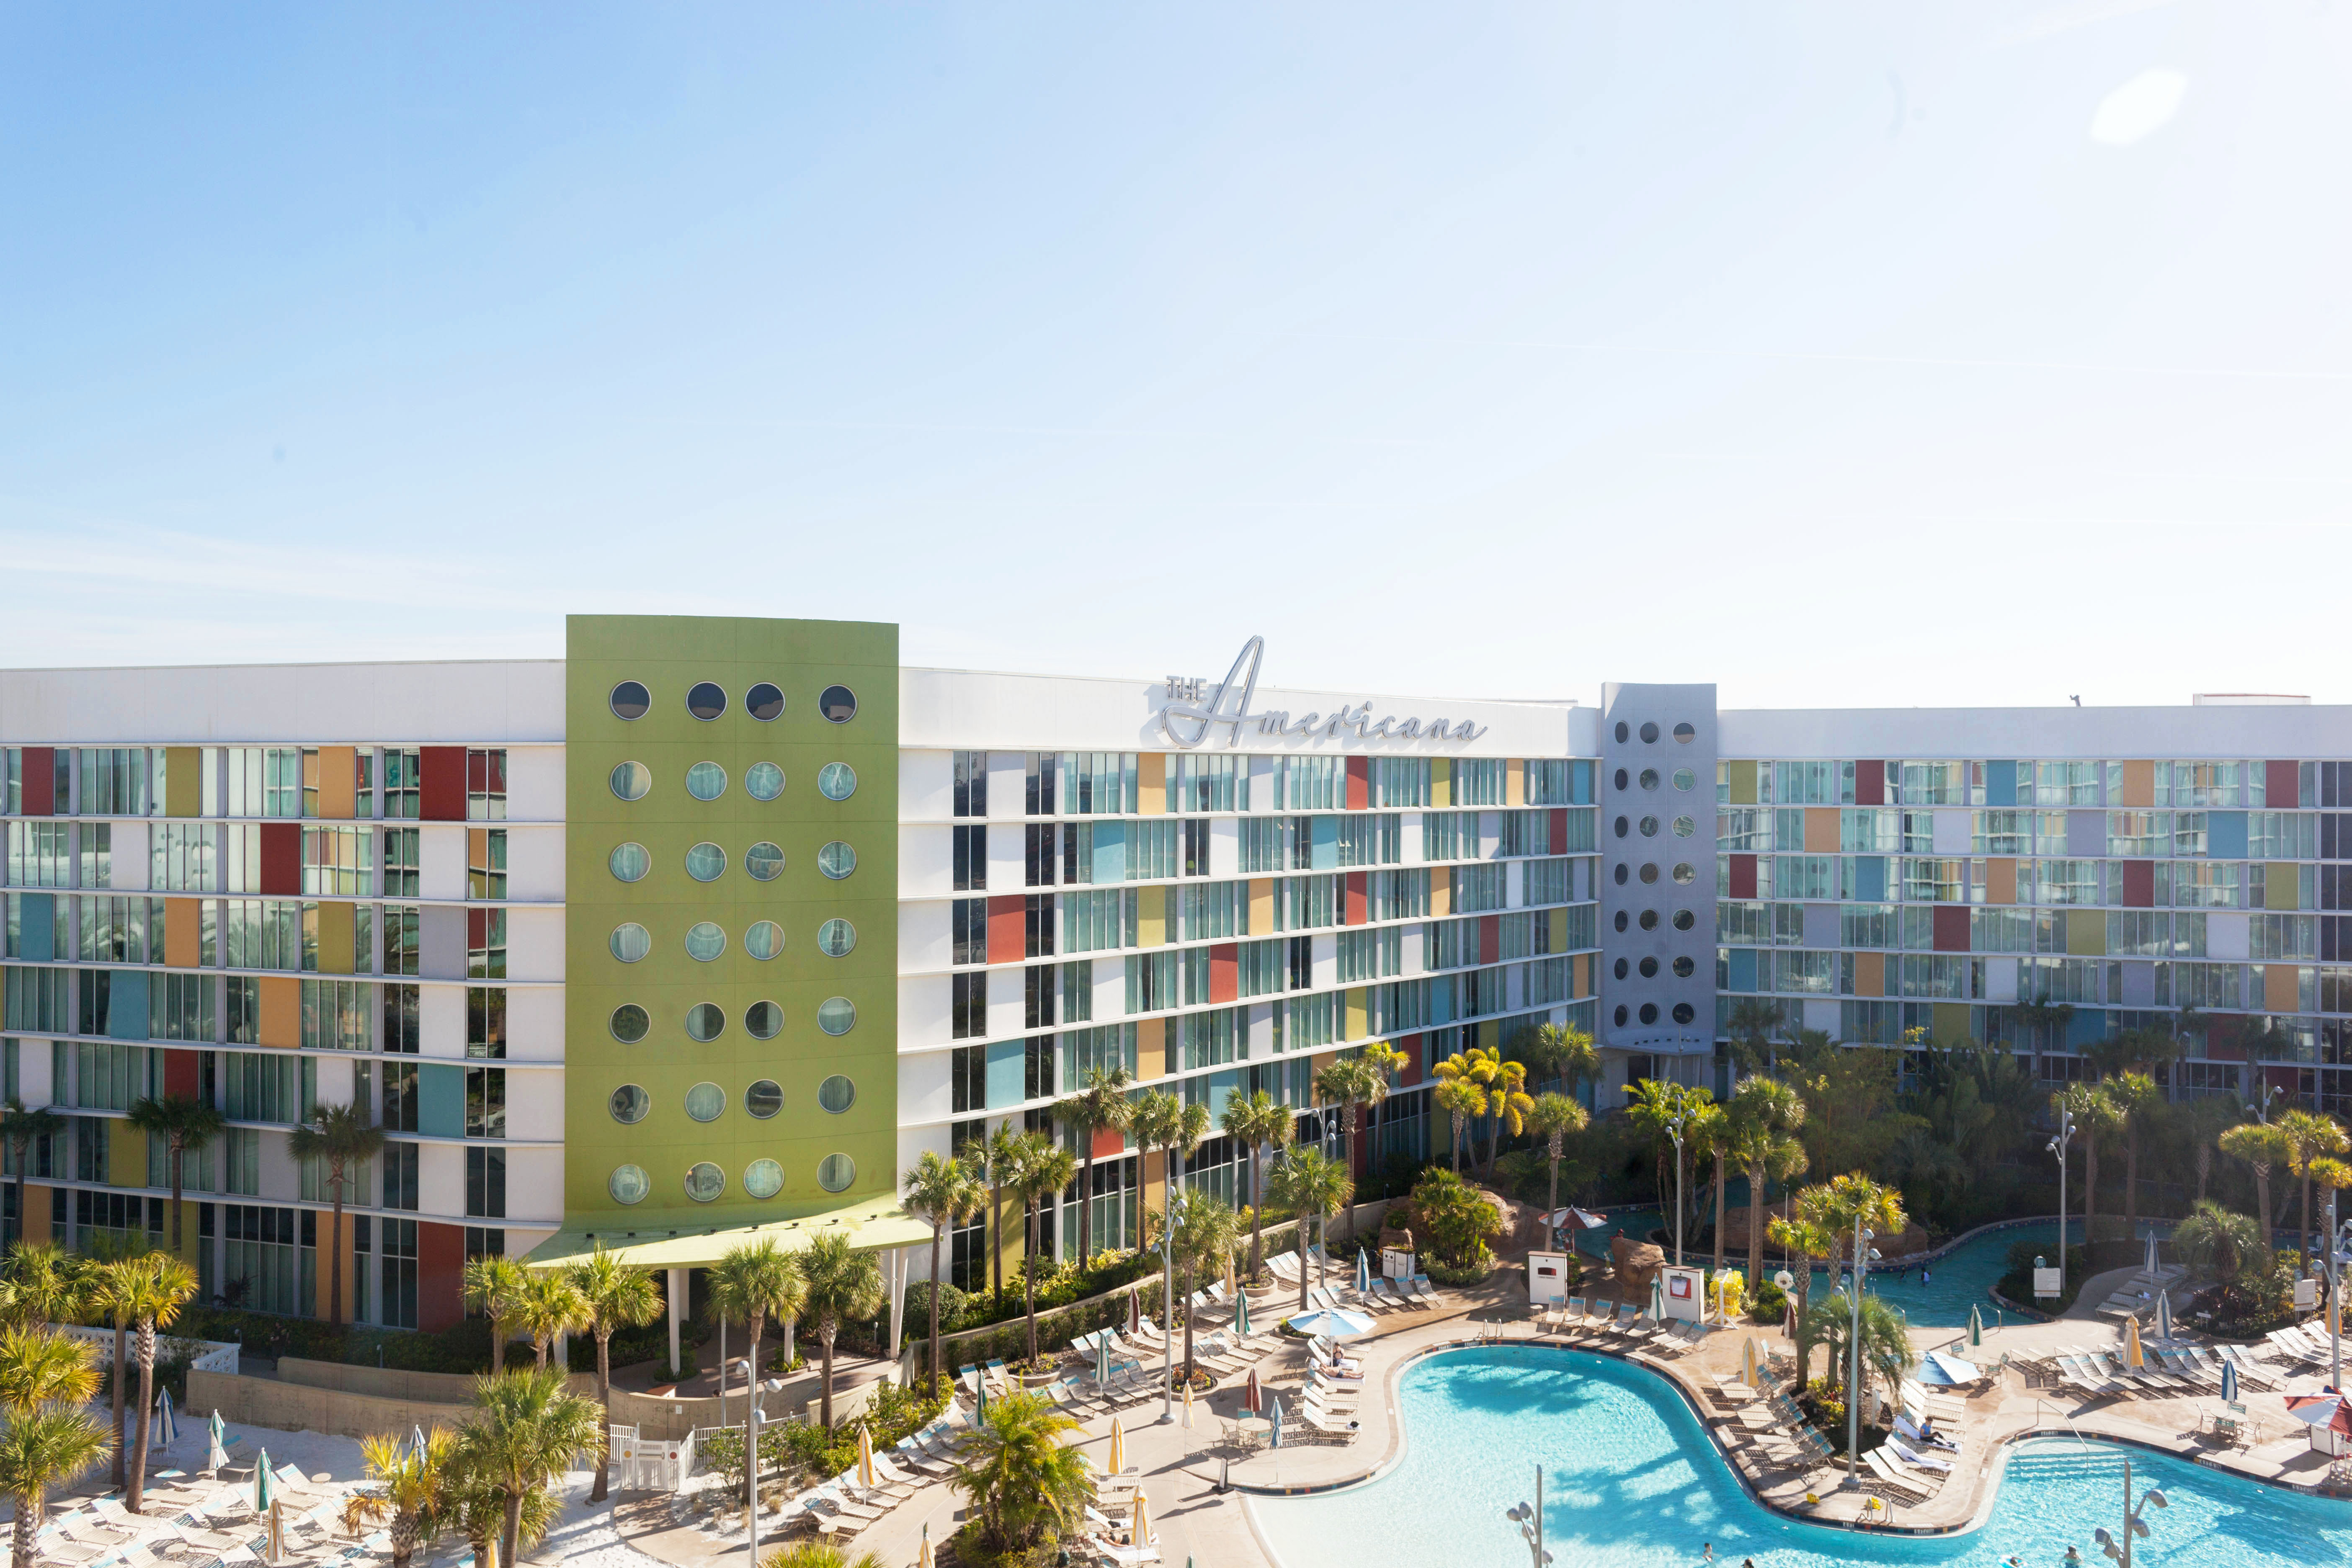 Cabana Bay Beach Resort Orlando